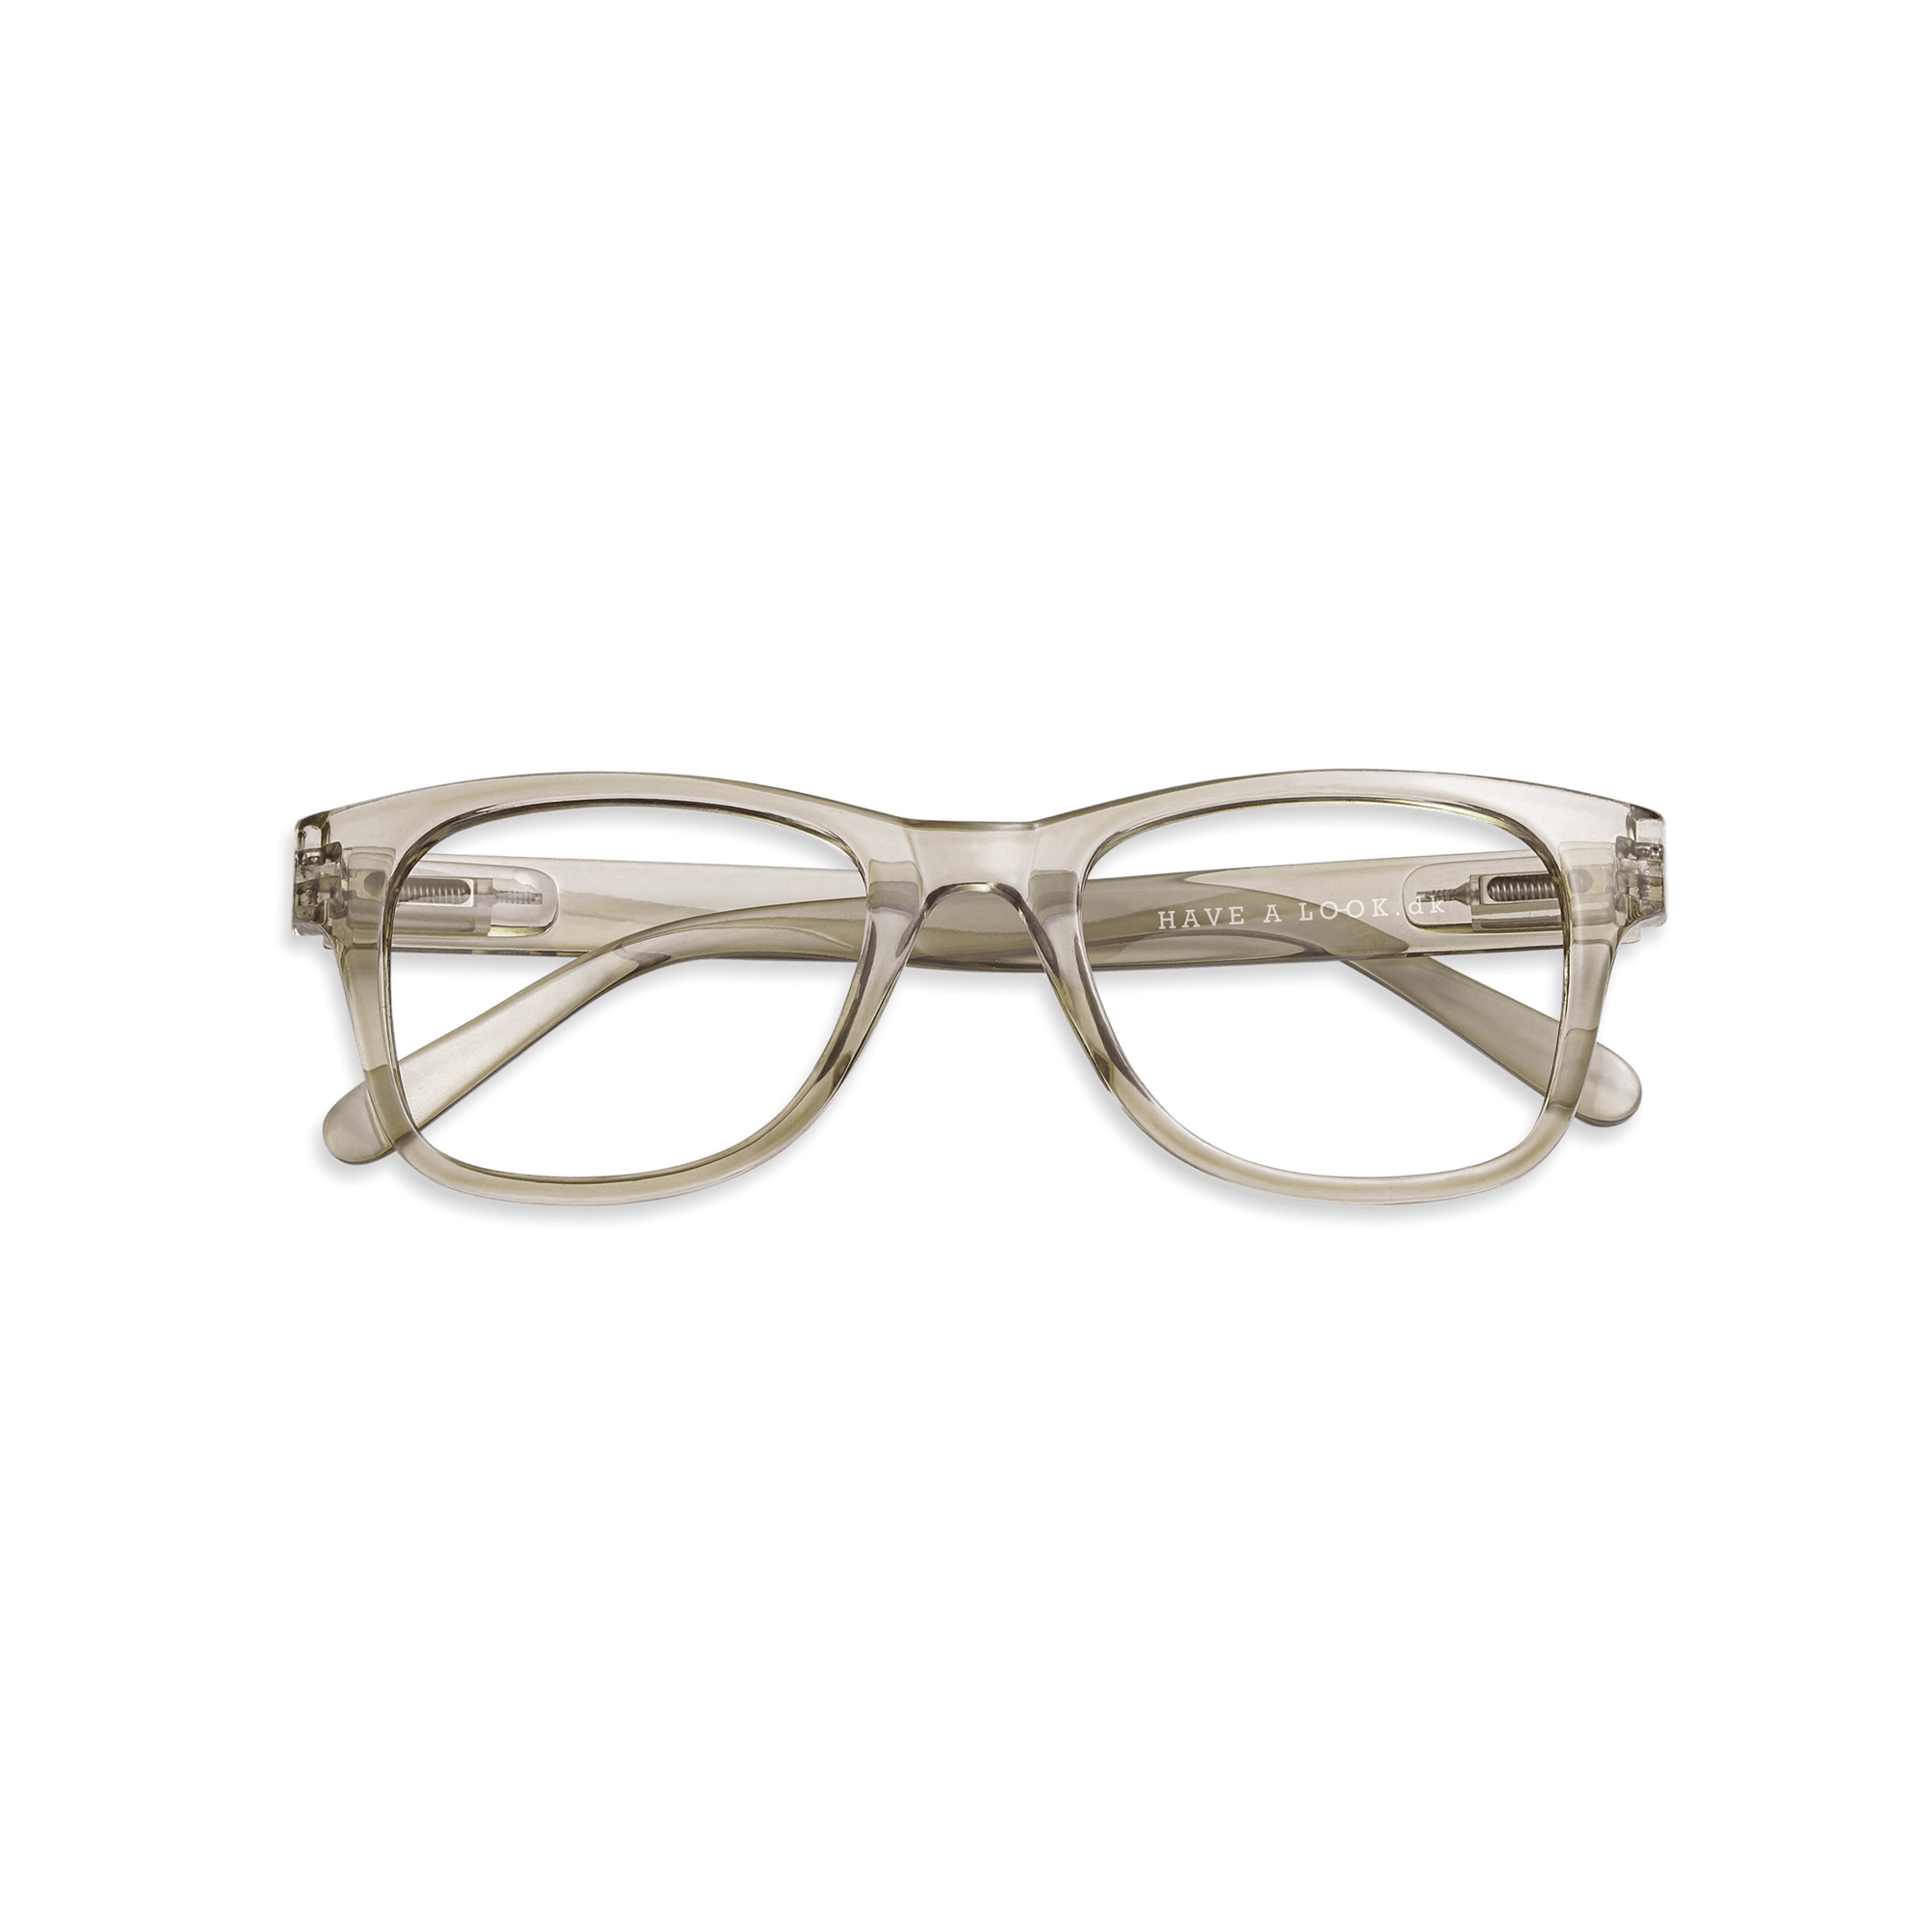 Reading glasses Type B - olive